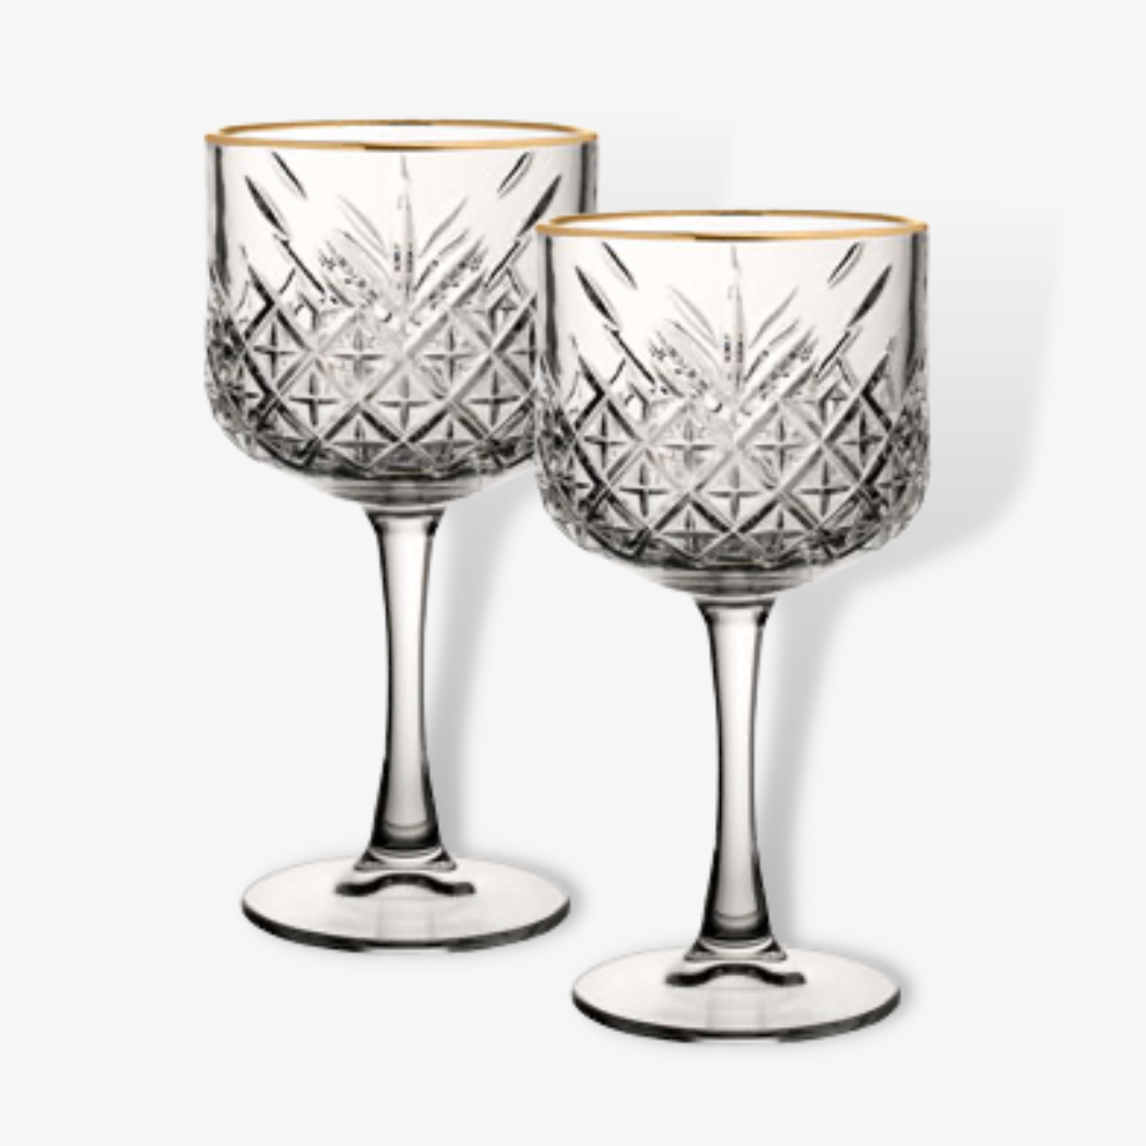 Gold Rim Vintage Style Cocktail Glasses